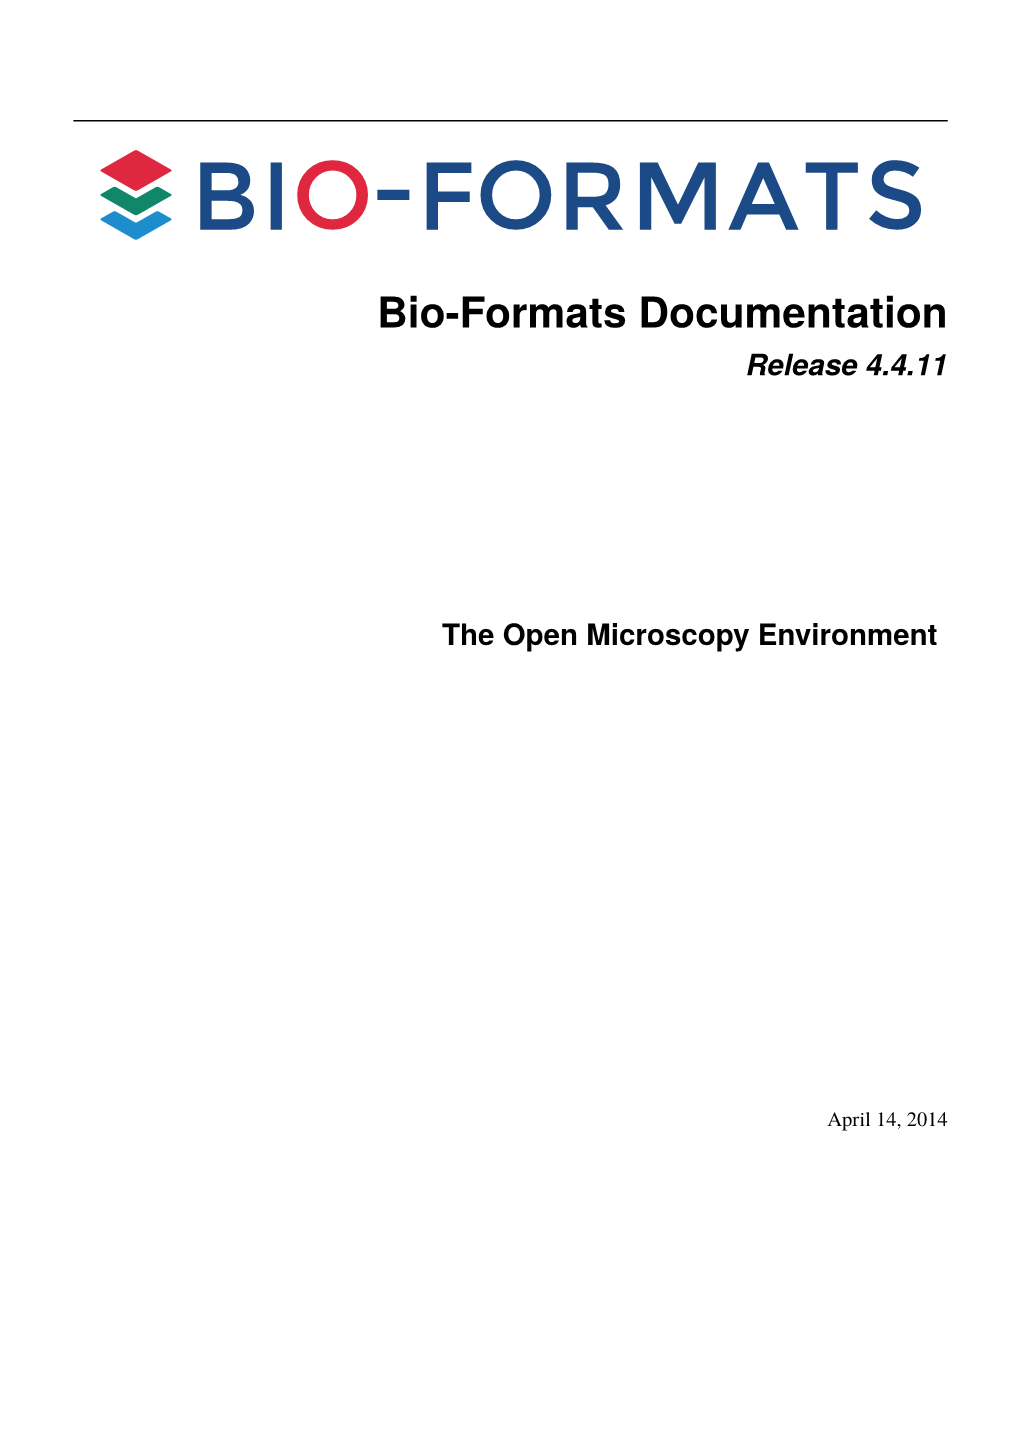 Bio-Formats Documentation Release 4.4.11